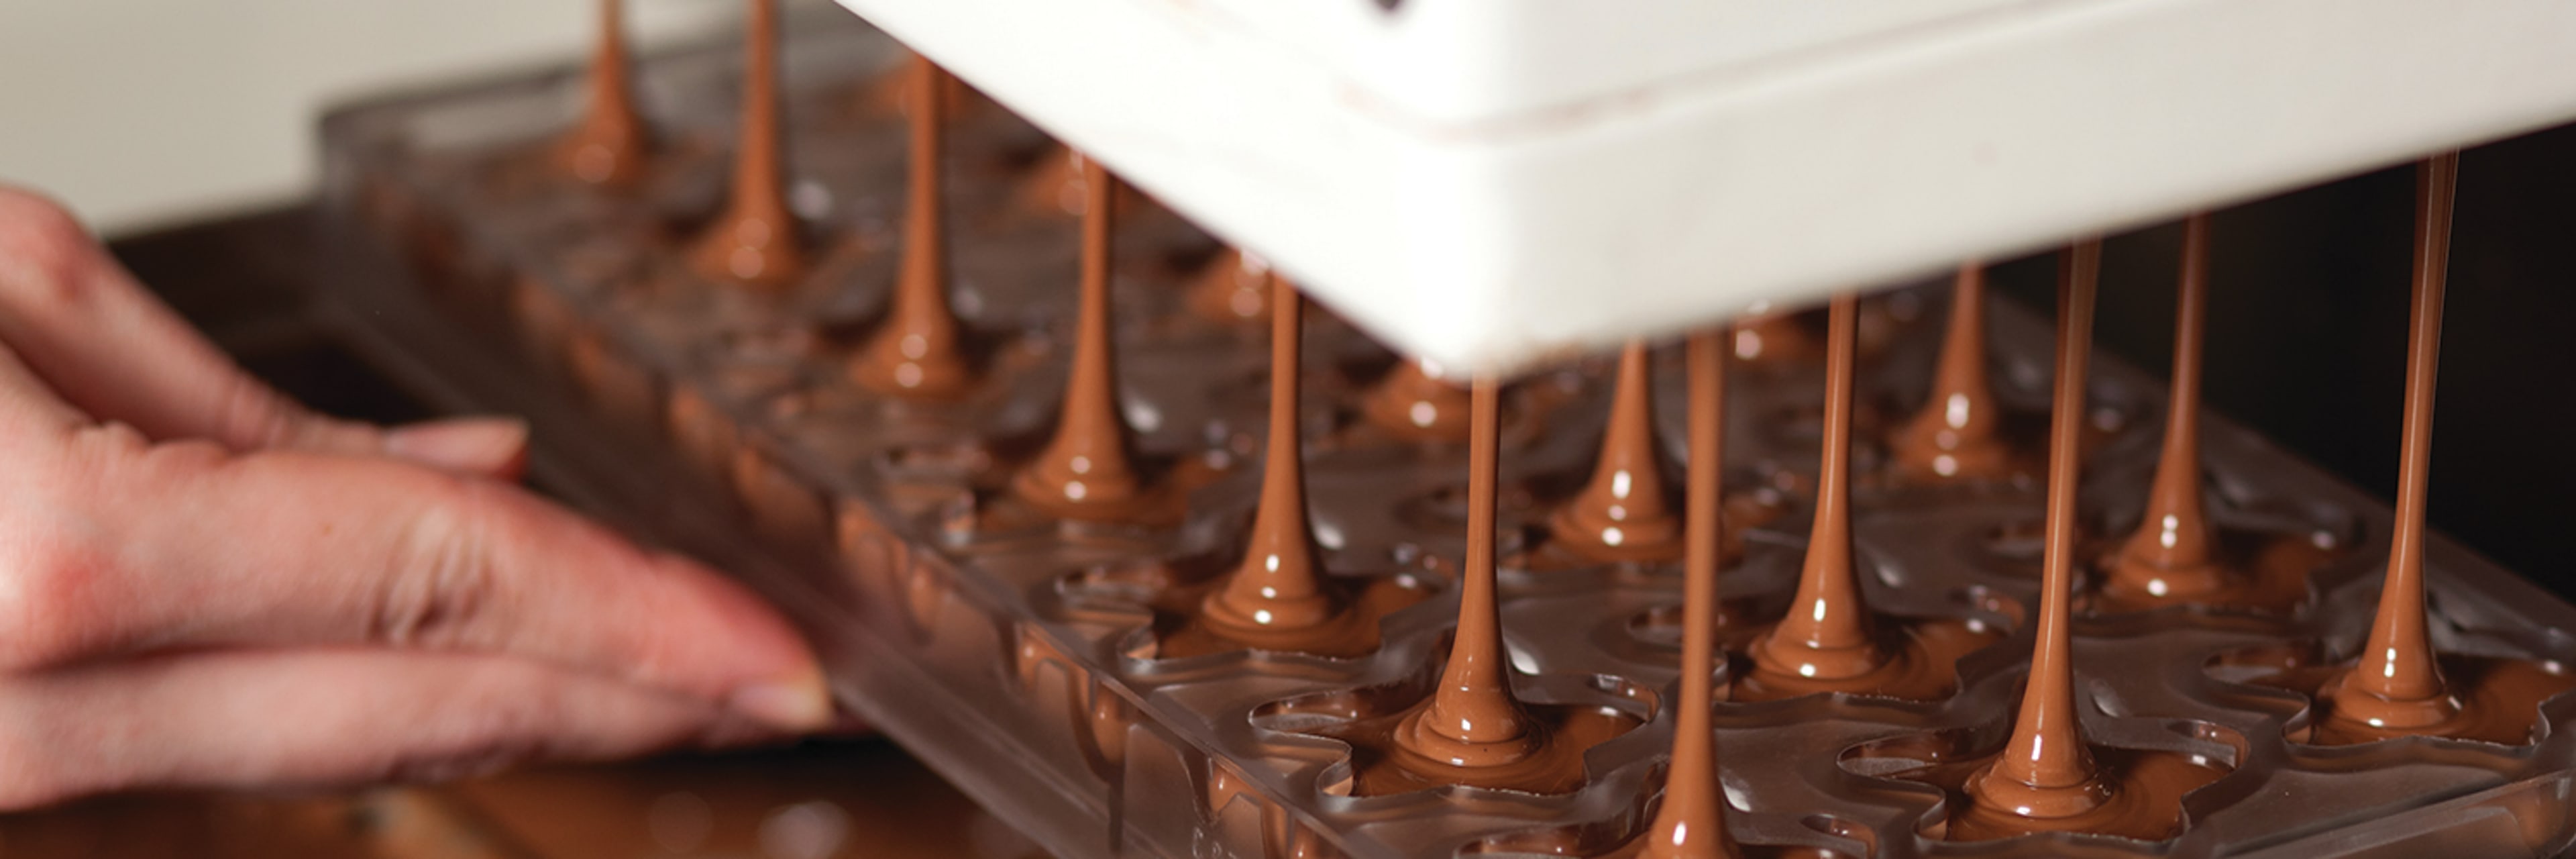 Choco Story - Gourmet Chocolate Museum